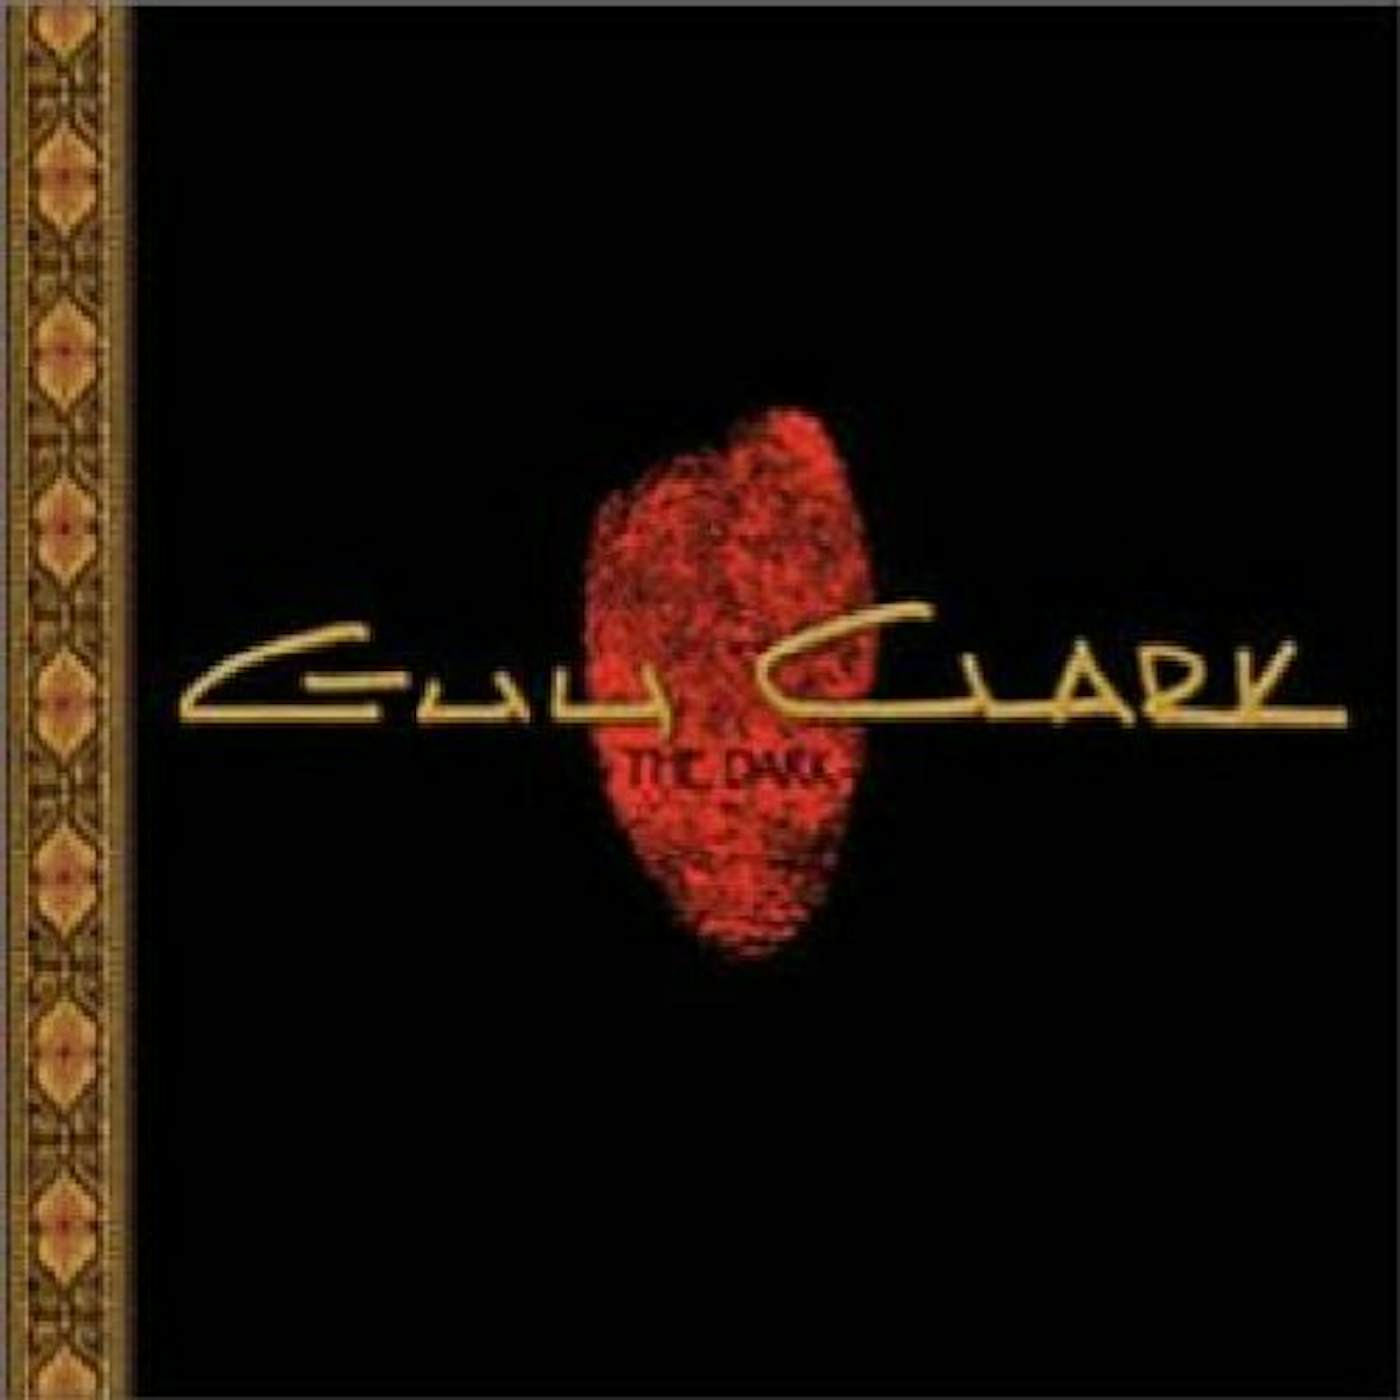 Guy Clark DARK CD